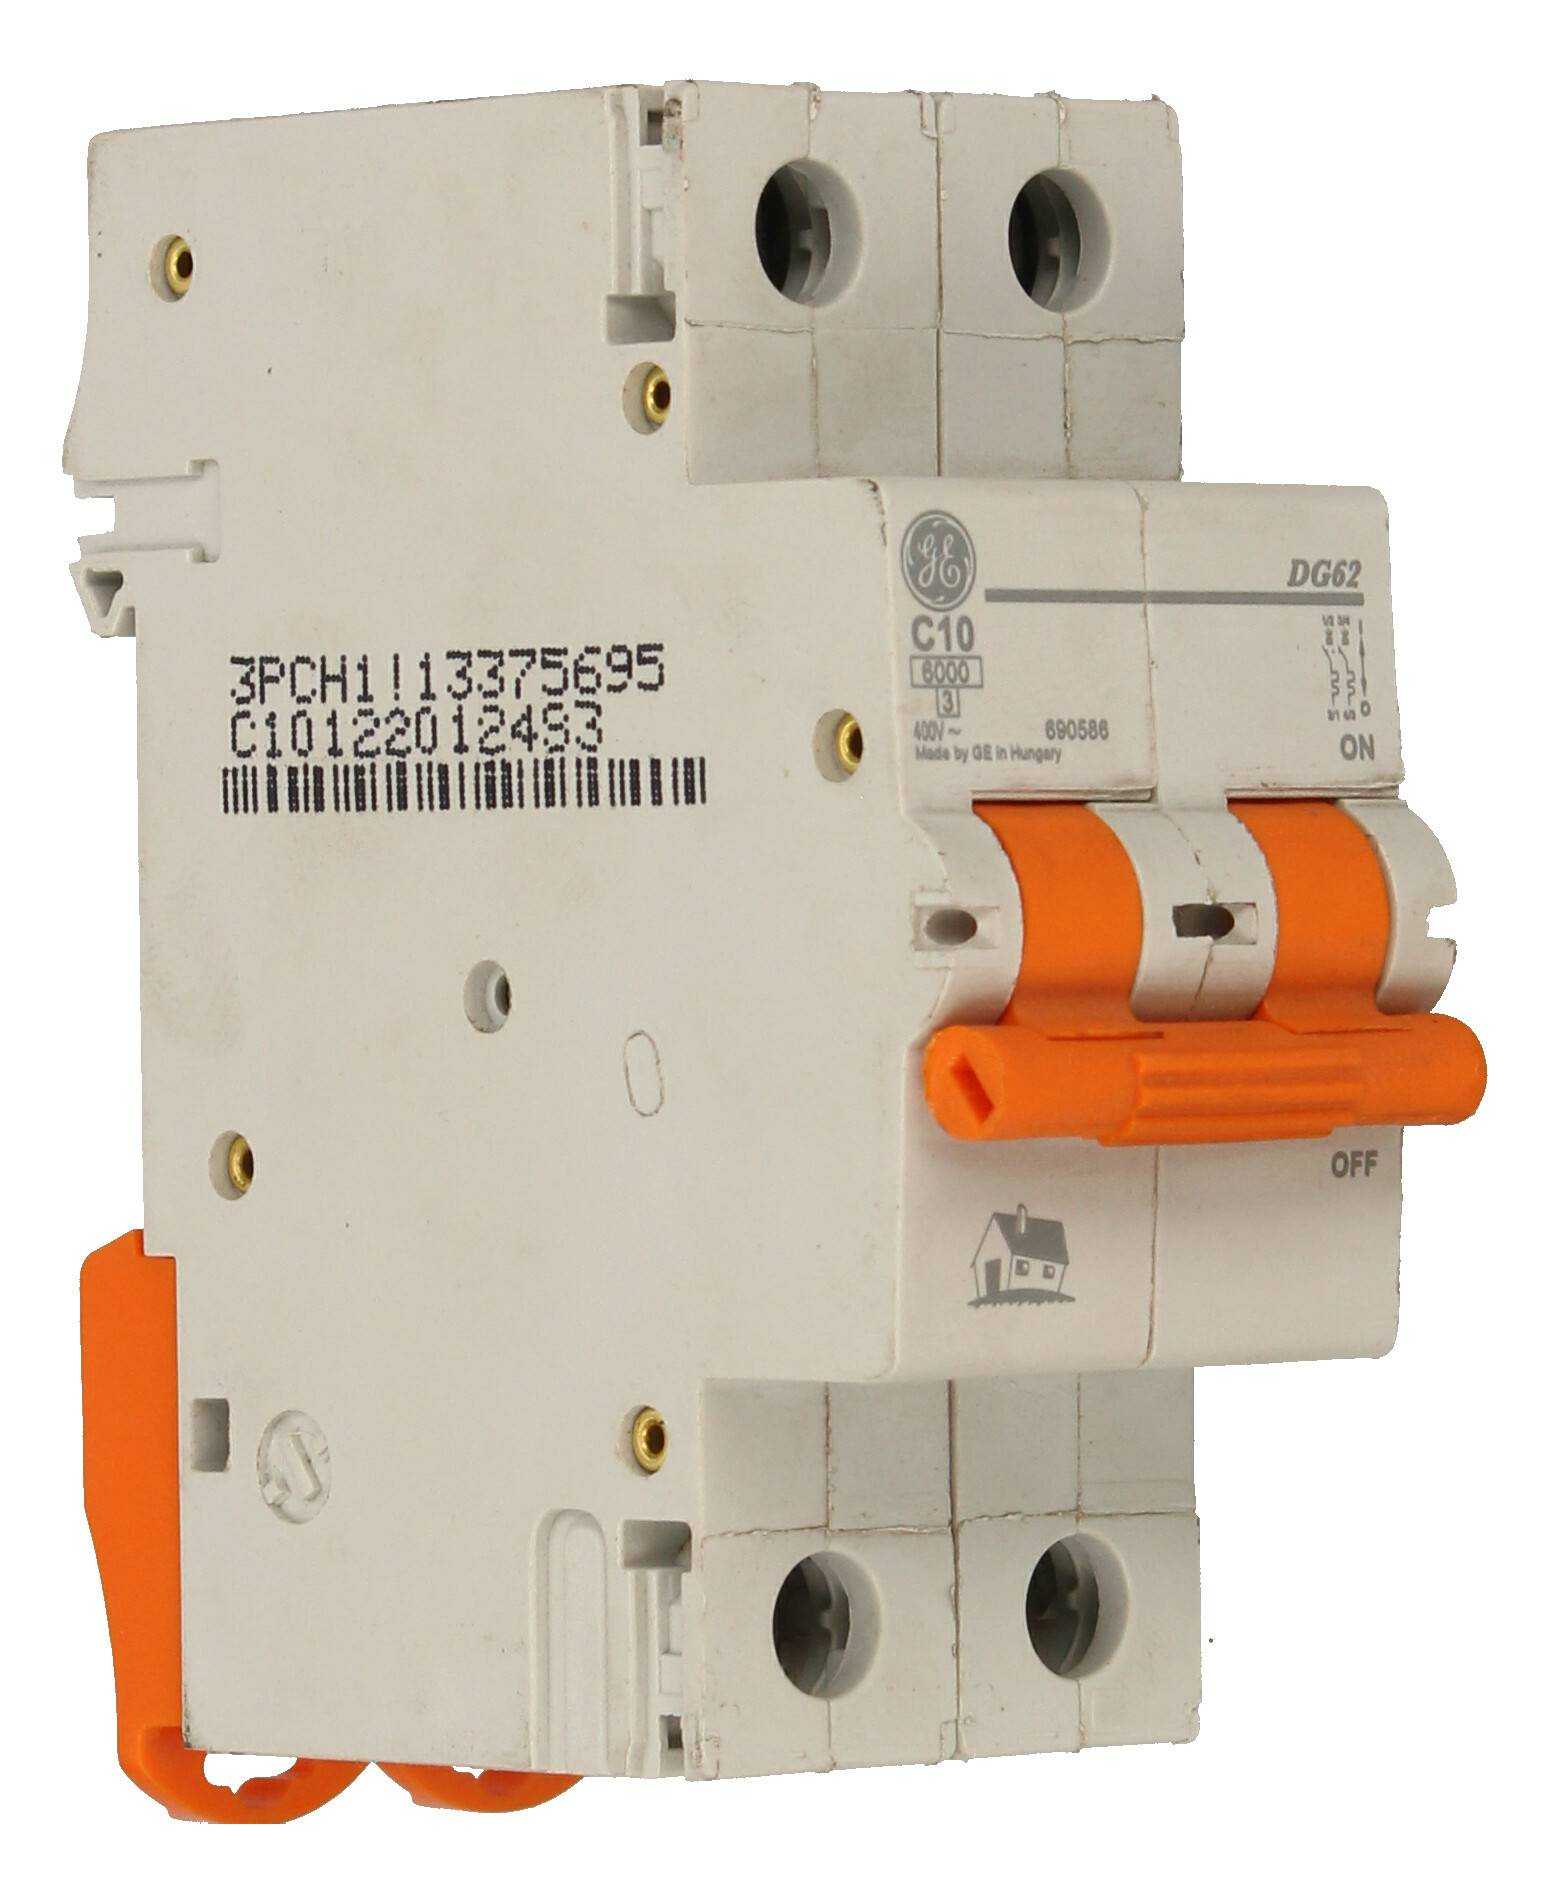 Interruptor de 690586 GE POWER DG62C10 - Imagem 1